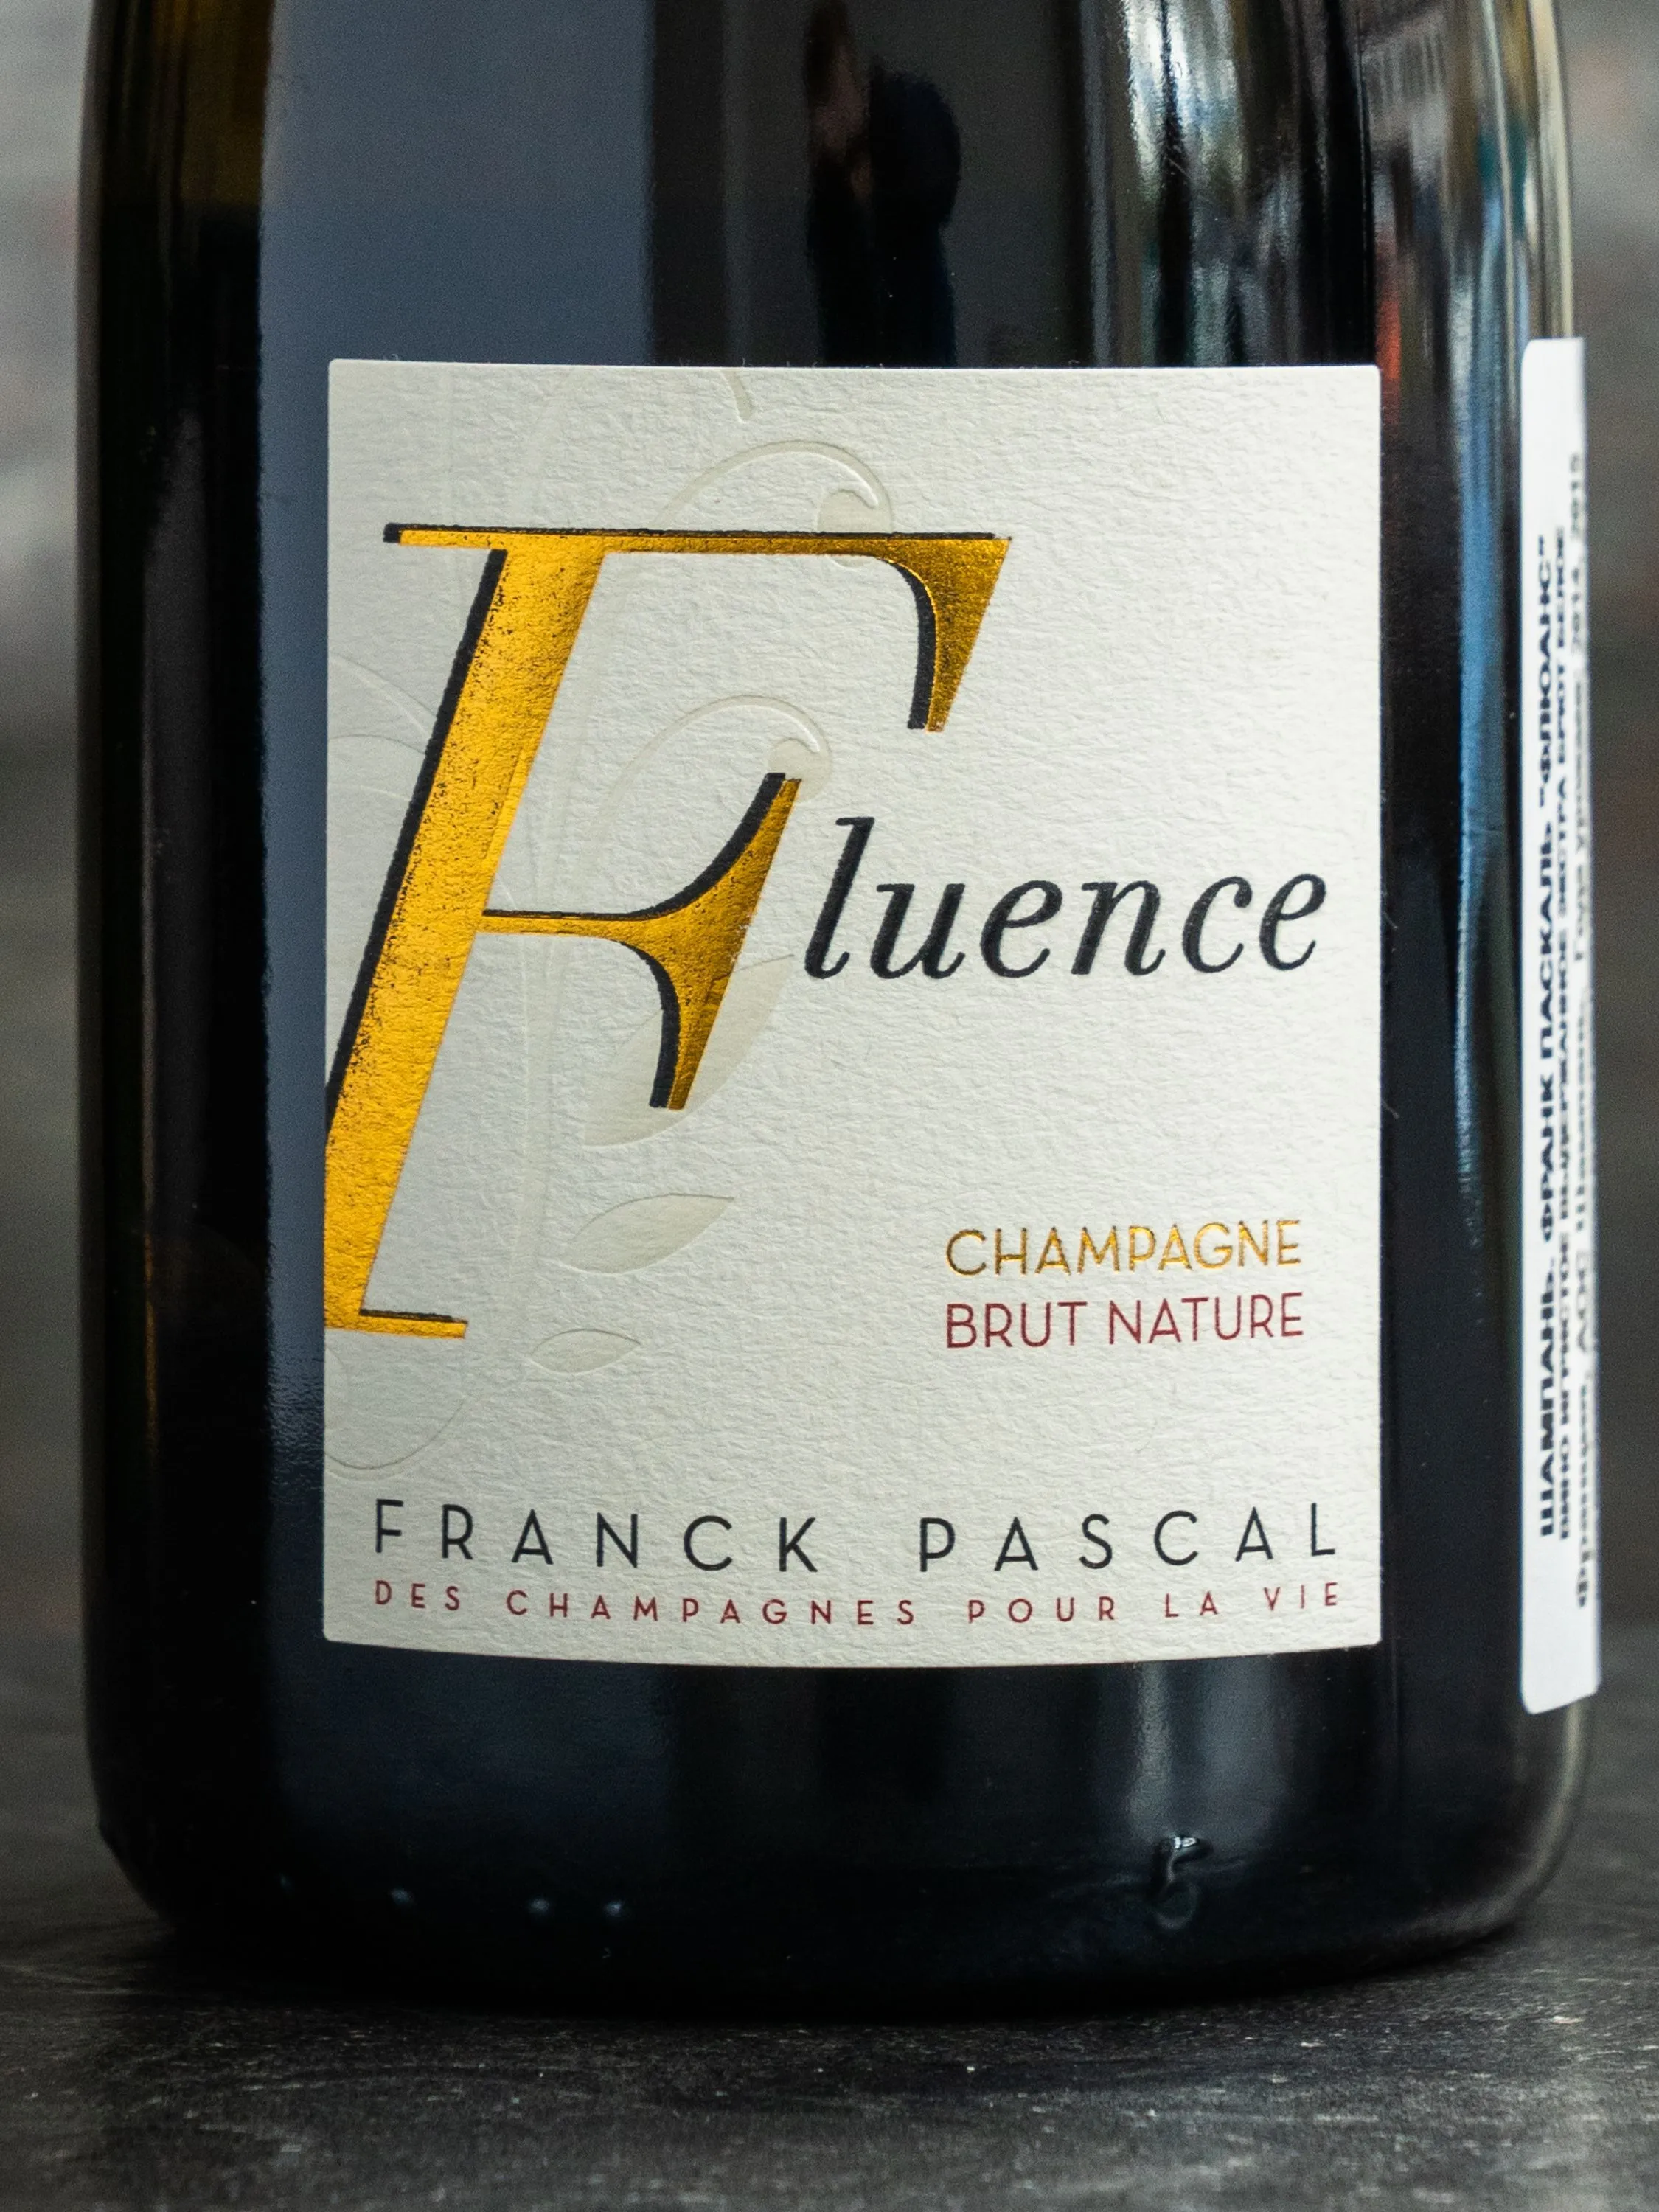 Этикетка Franck Pascal Fluence Brut Nature